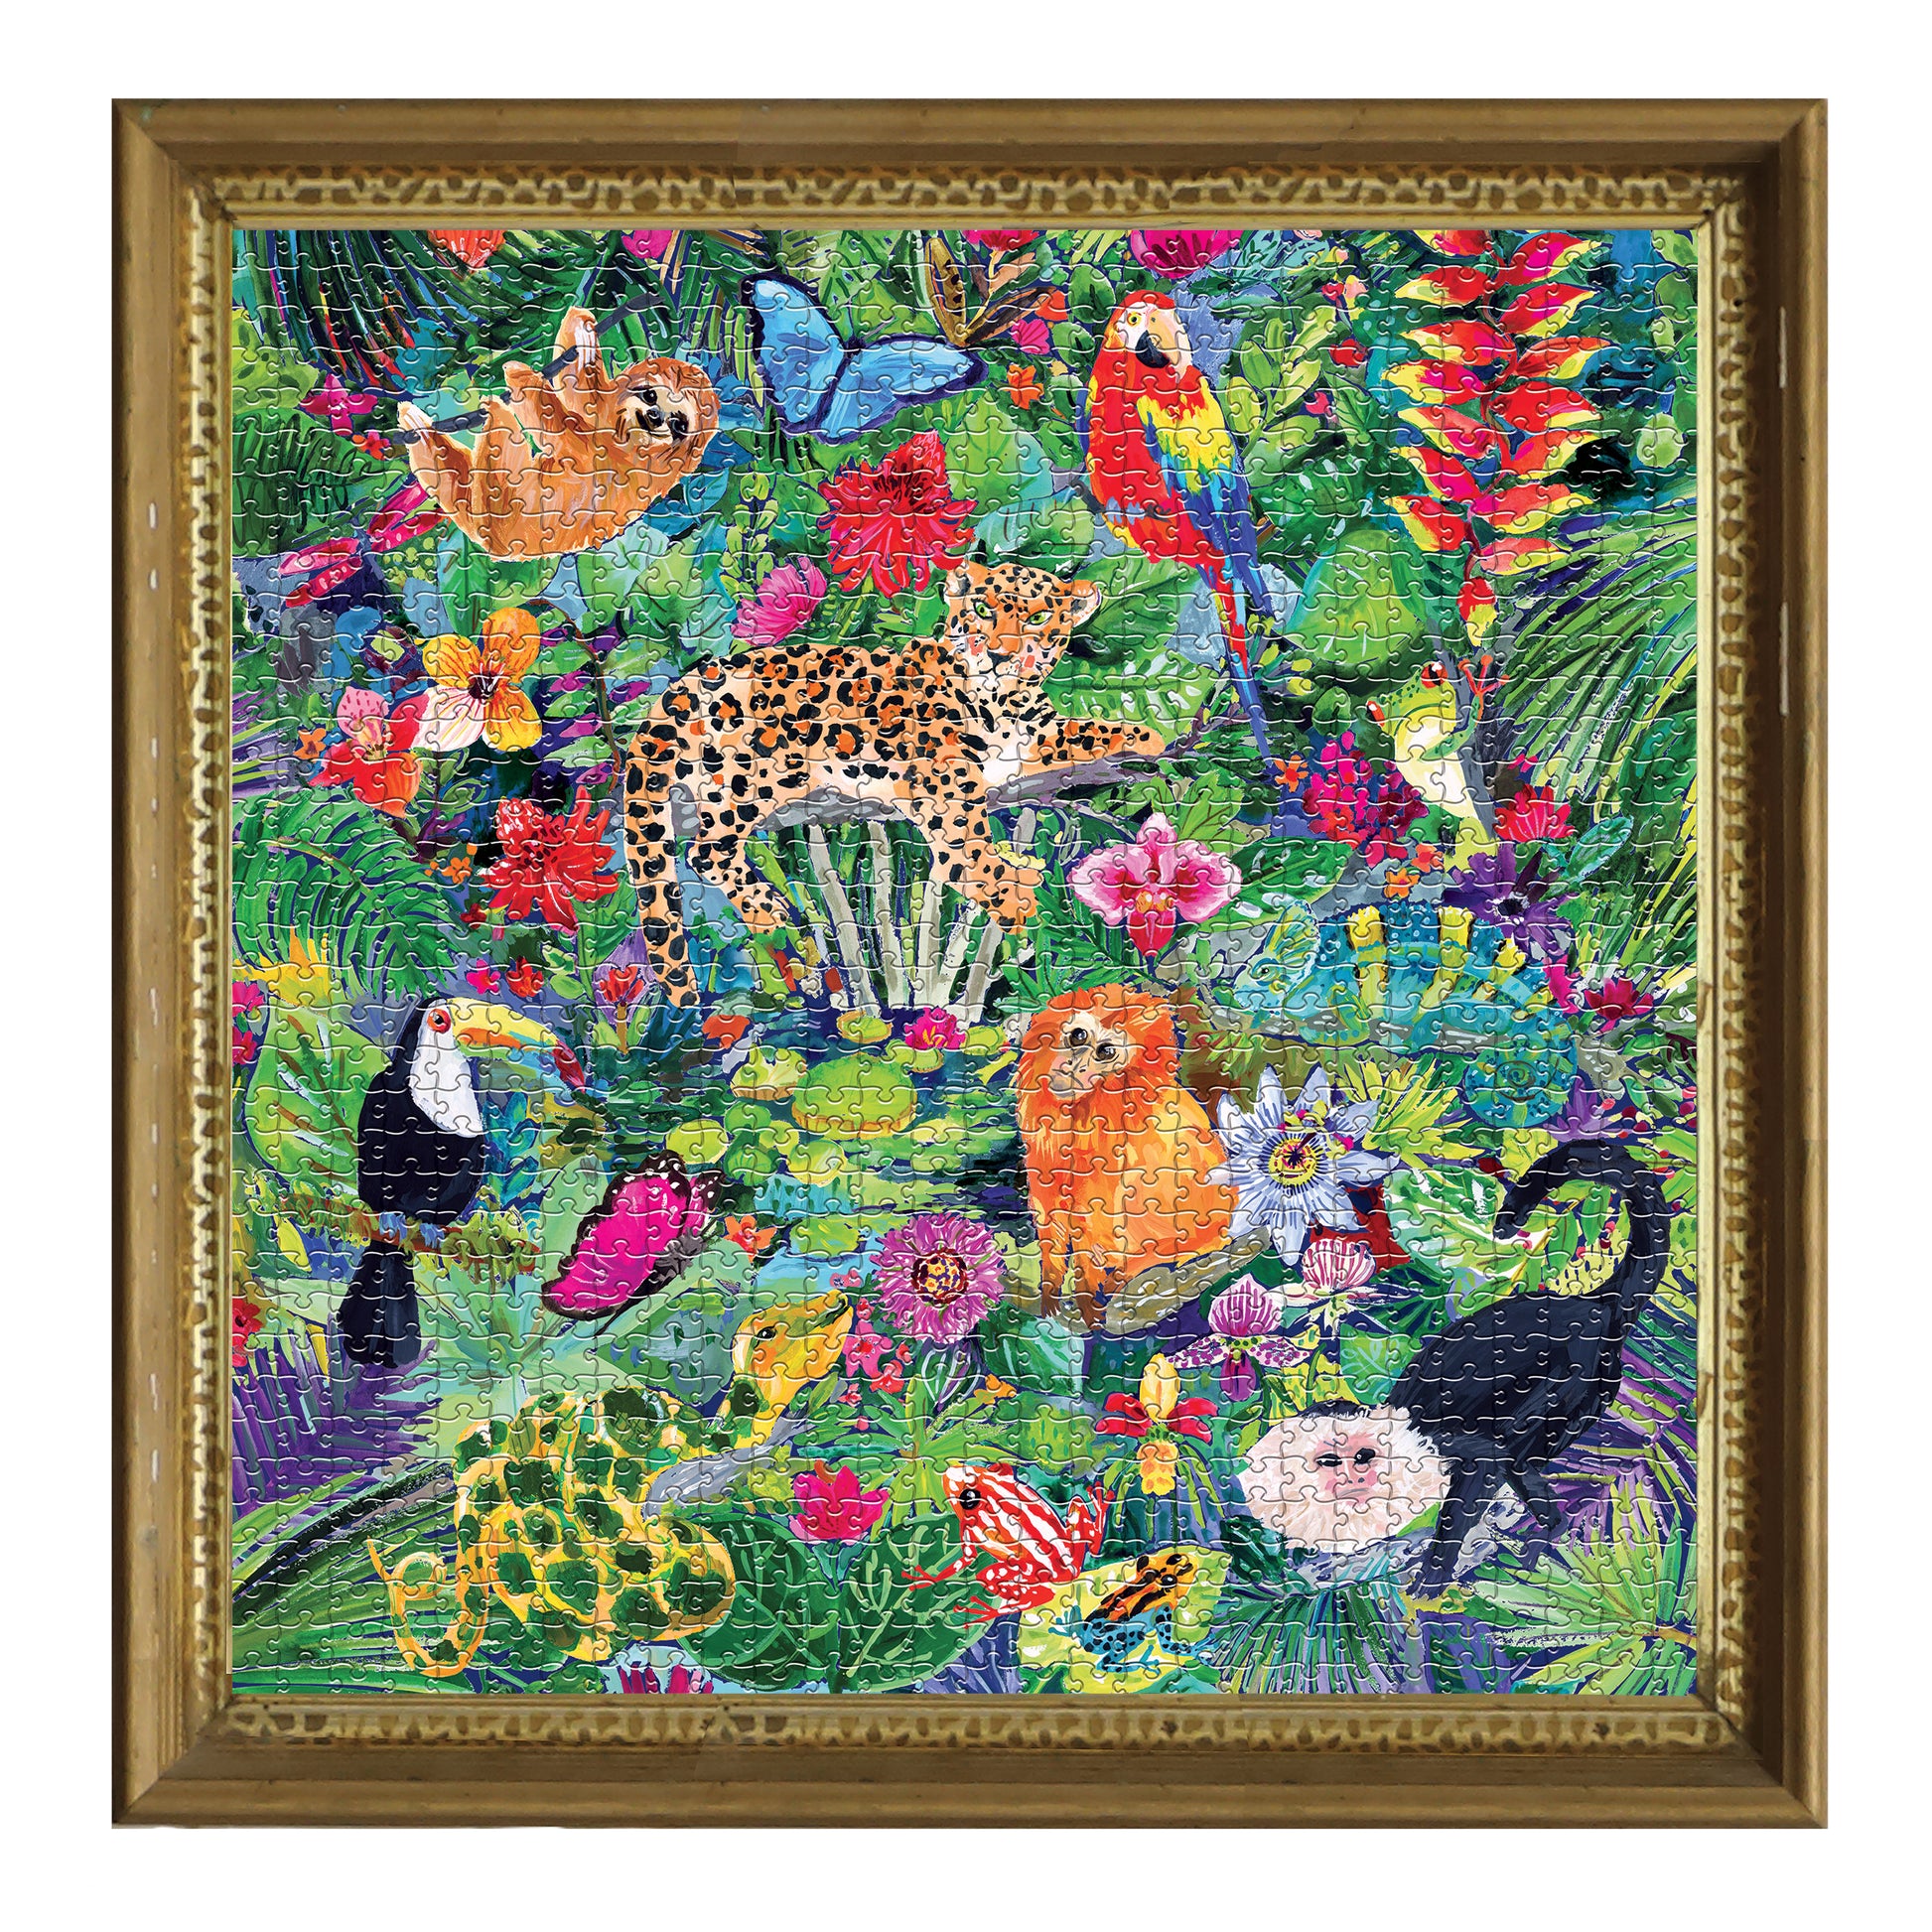 Amazon Animal Rainforest 1000 Piece Jigsaw Puzzle | eeBoo Piece & Love | Great Gift for Animal Lovers